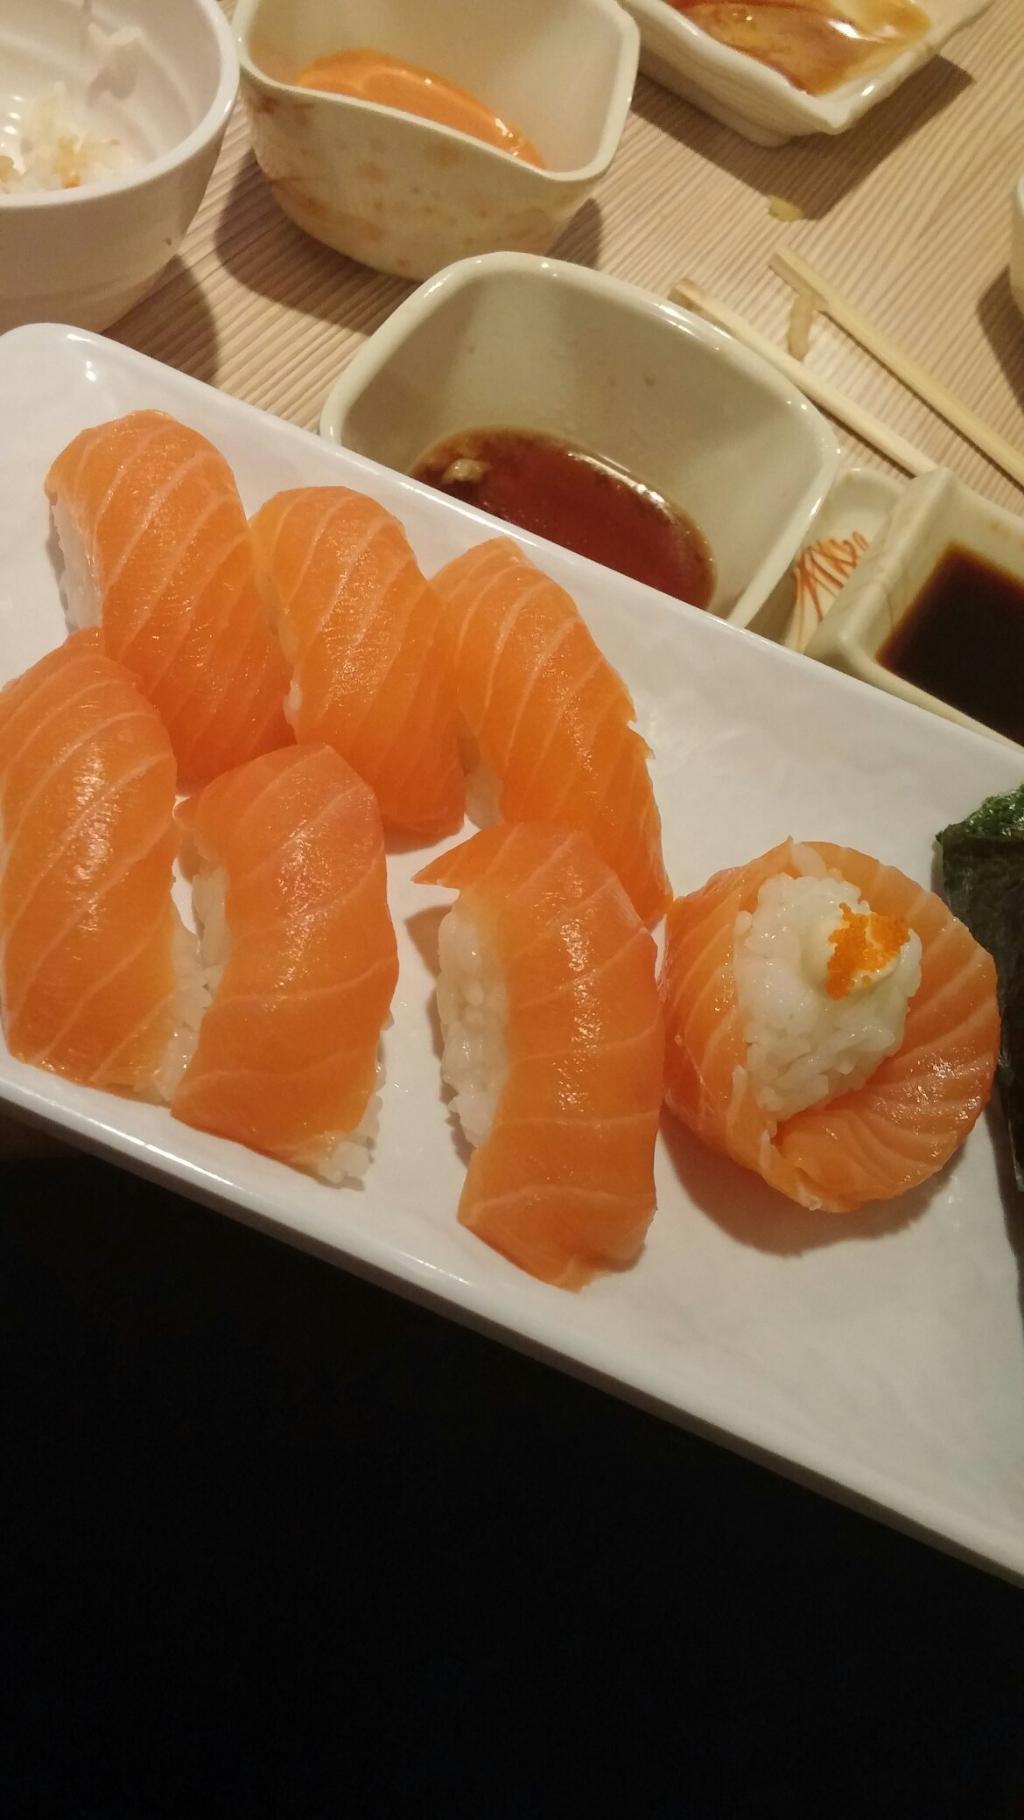 Tenko Sushi